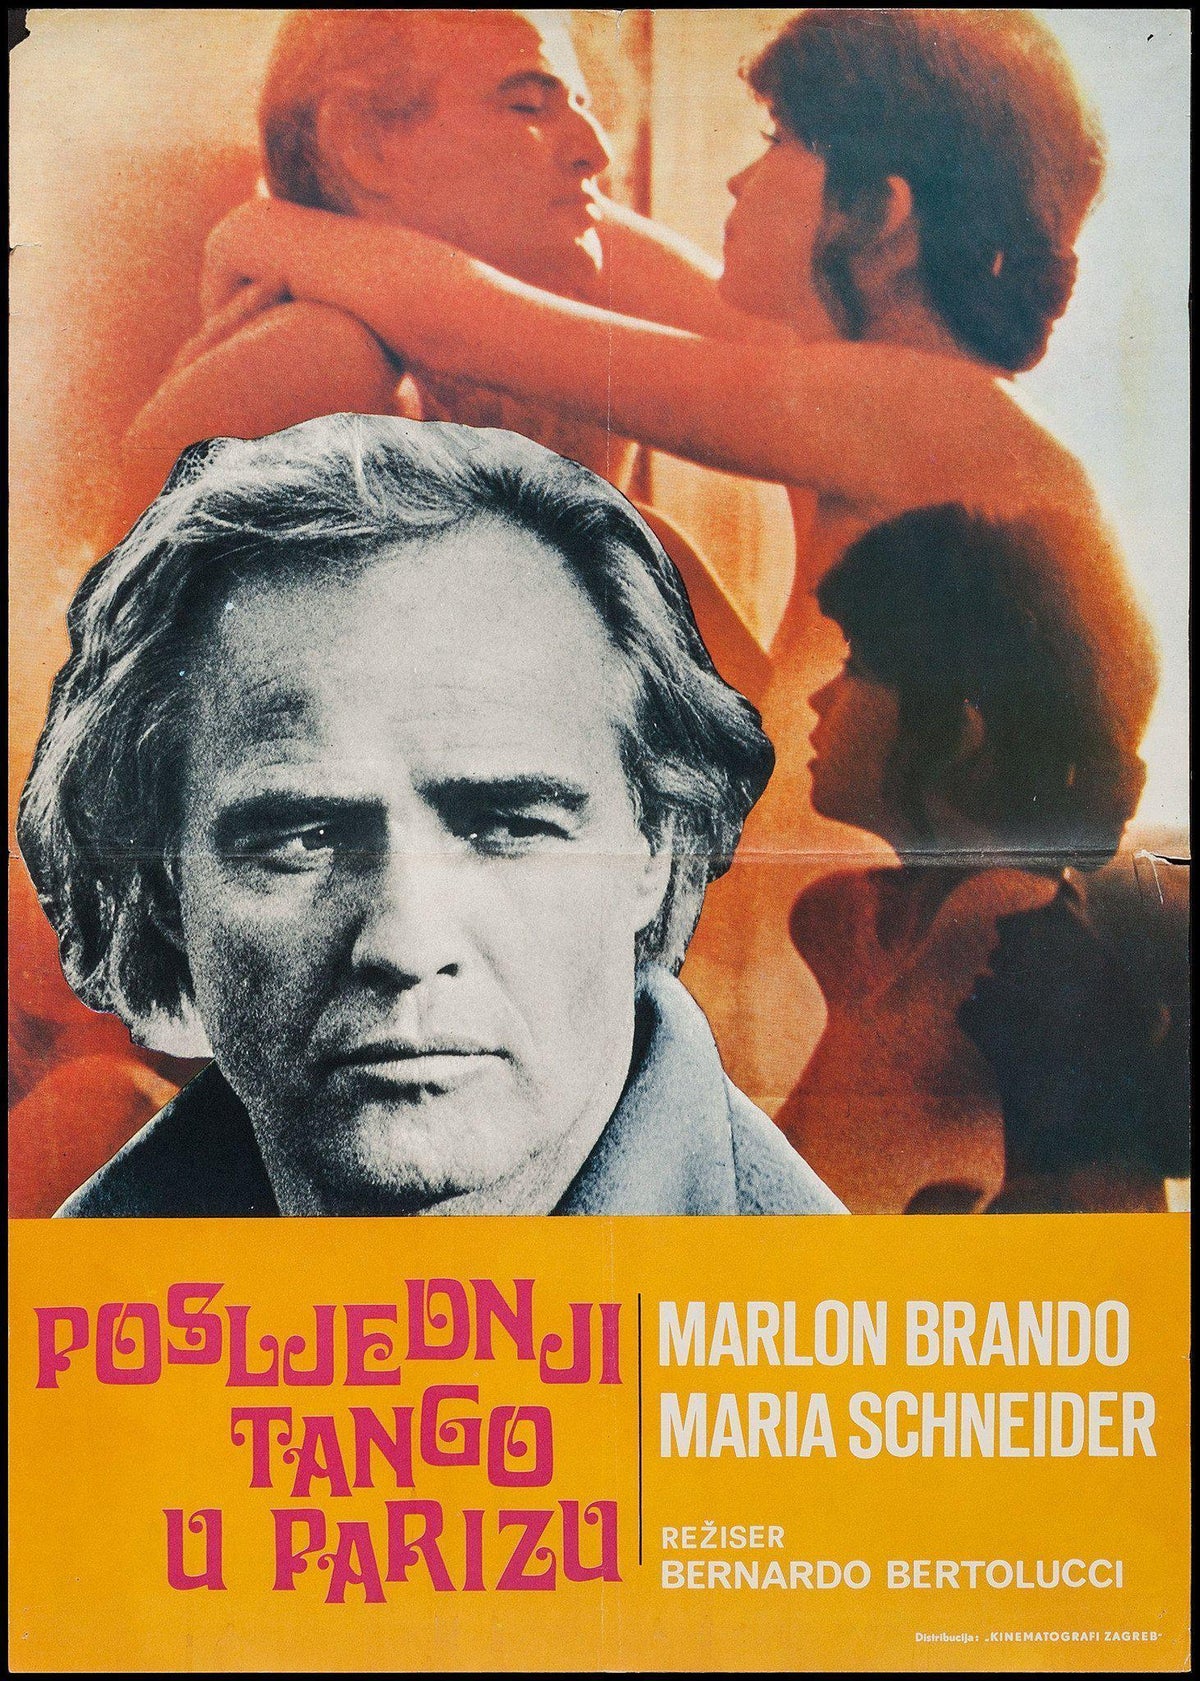 Last Tango In Paris Yugoslavian (19x27) Original Vintage Movie Poster